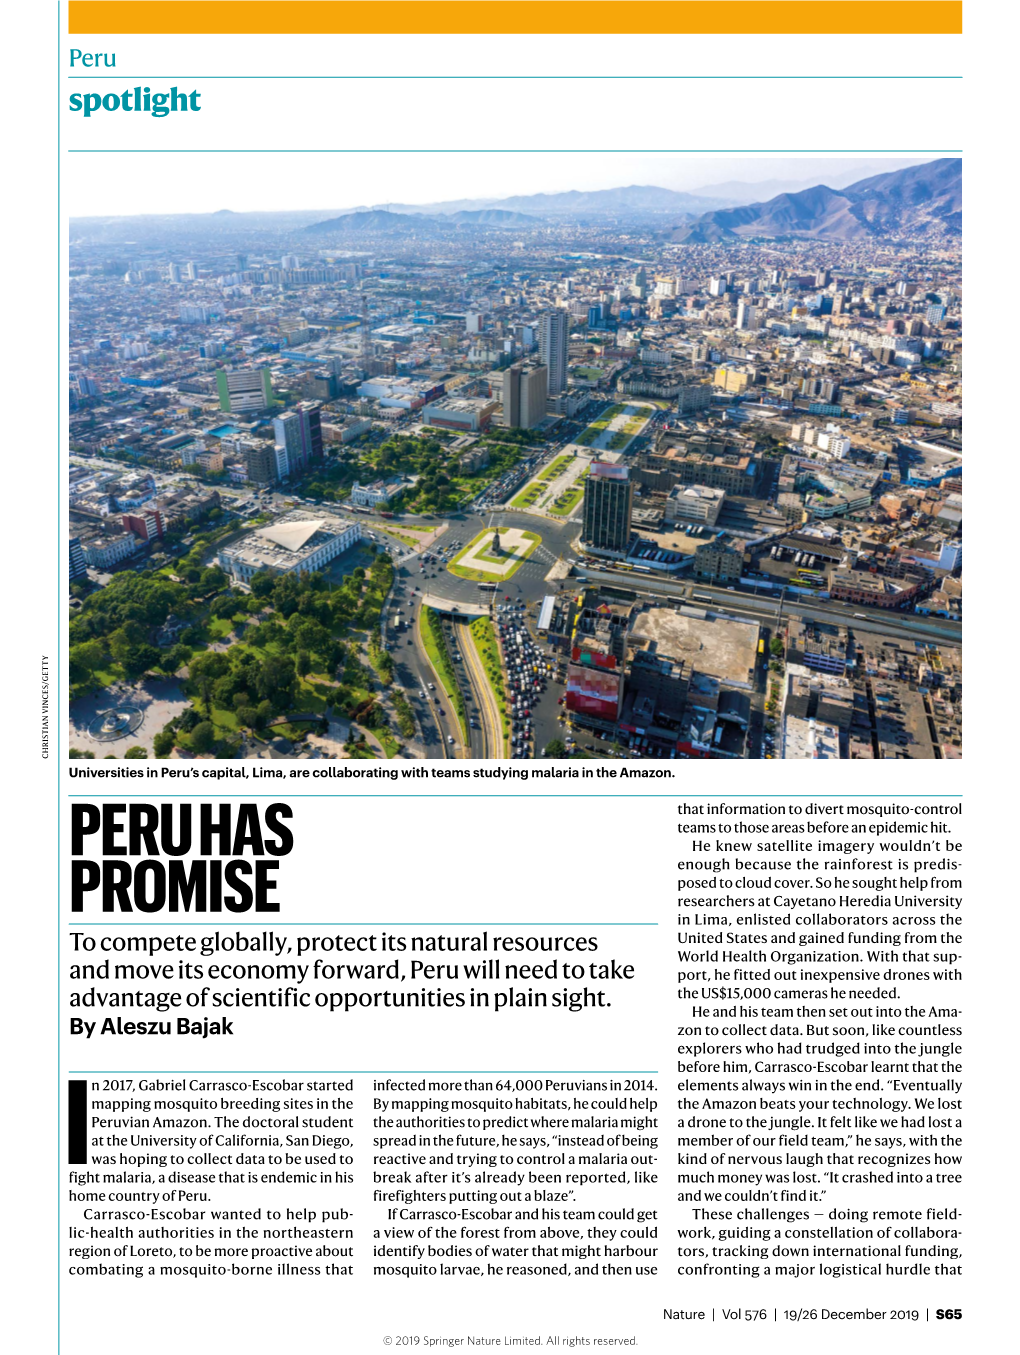 Peru Has Promise